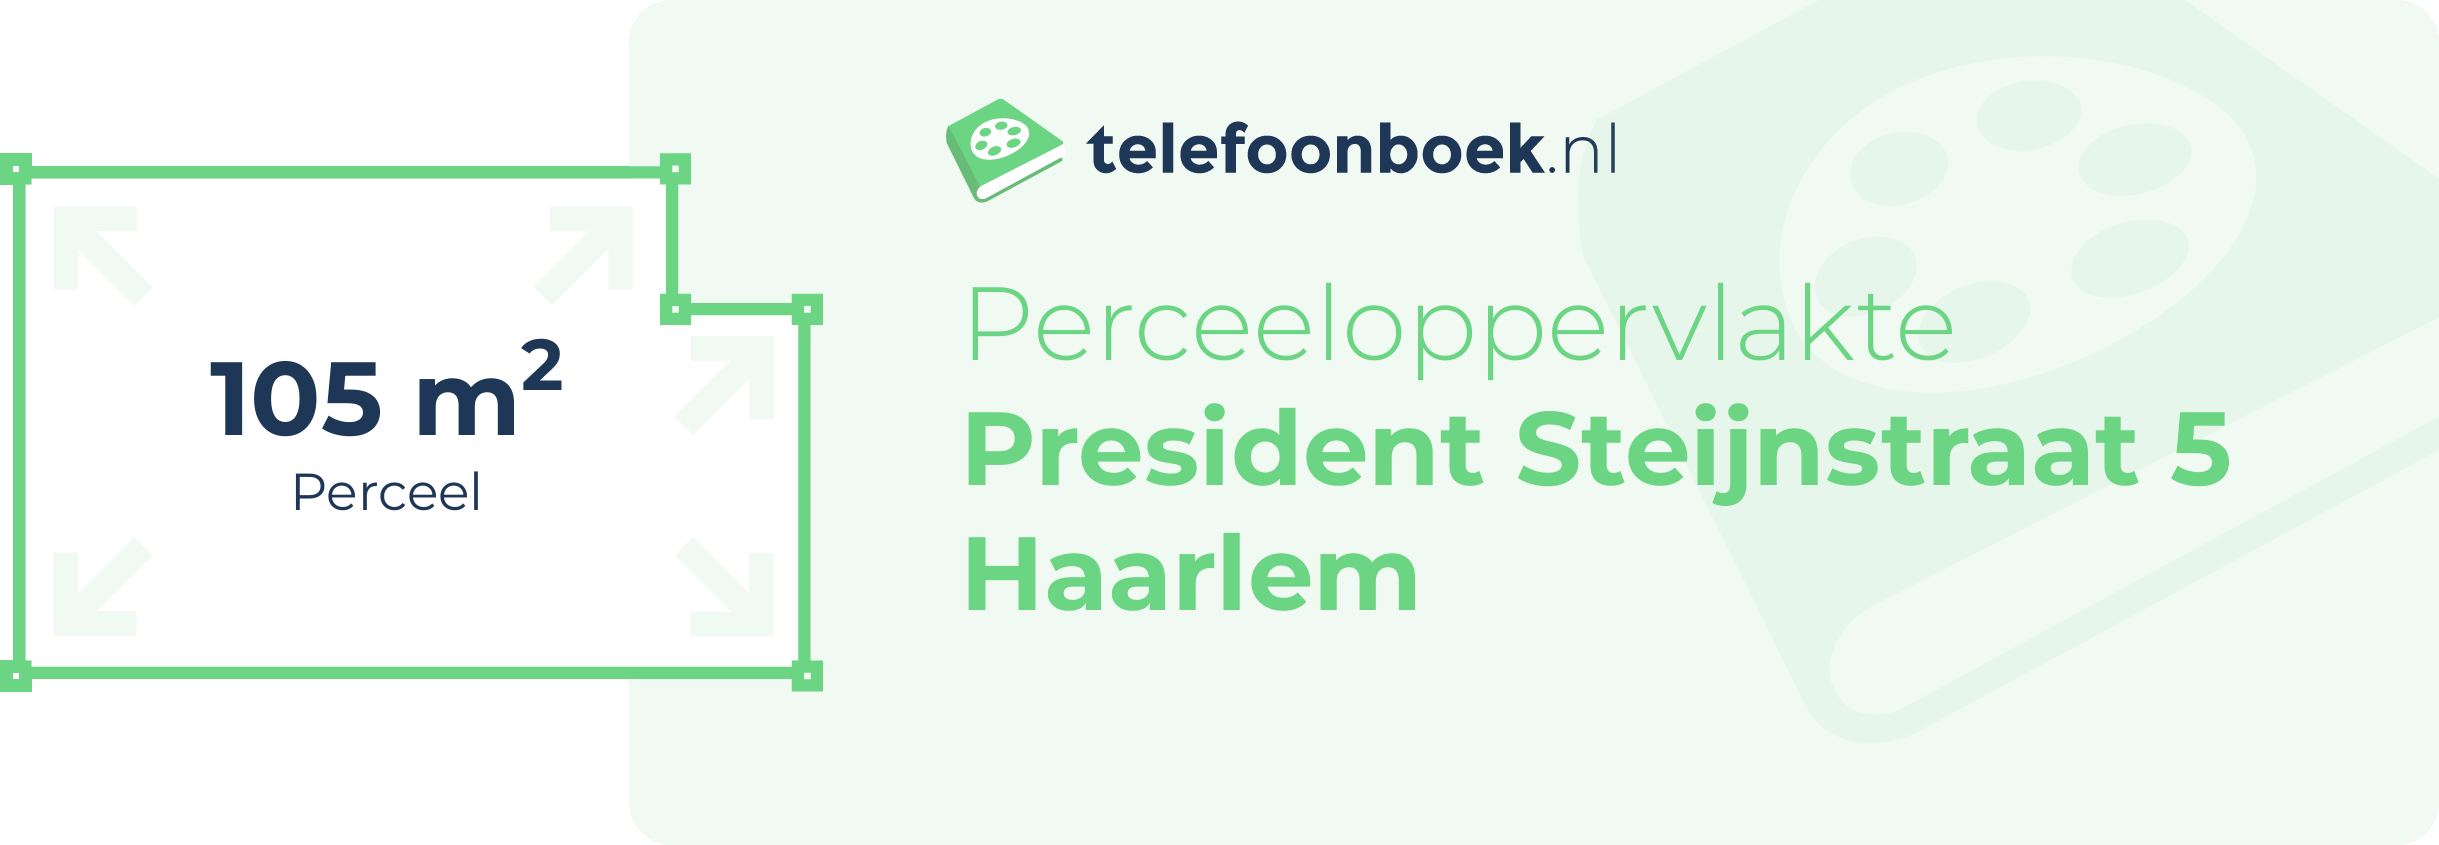 Perceeloppervlakte President Steijnstraat 5 Haarlem